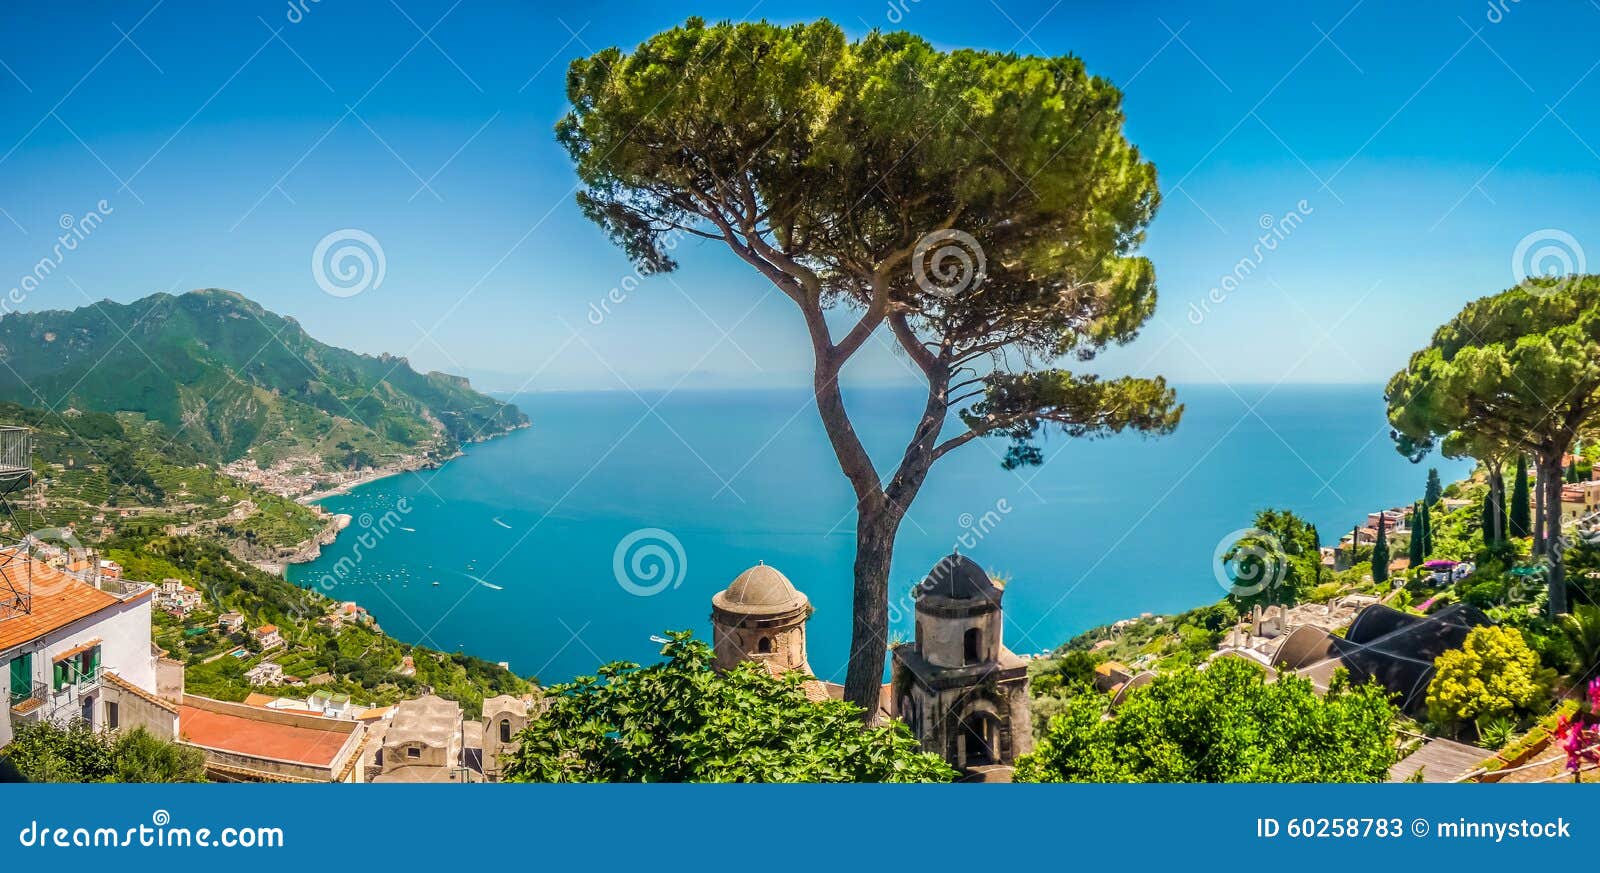 amalfi coast from villa rufolo gardens in ravello, campania, italy